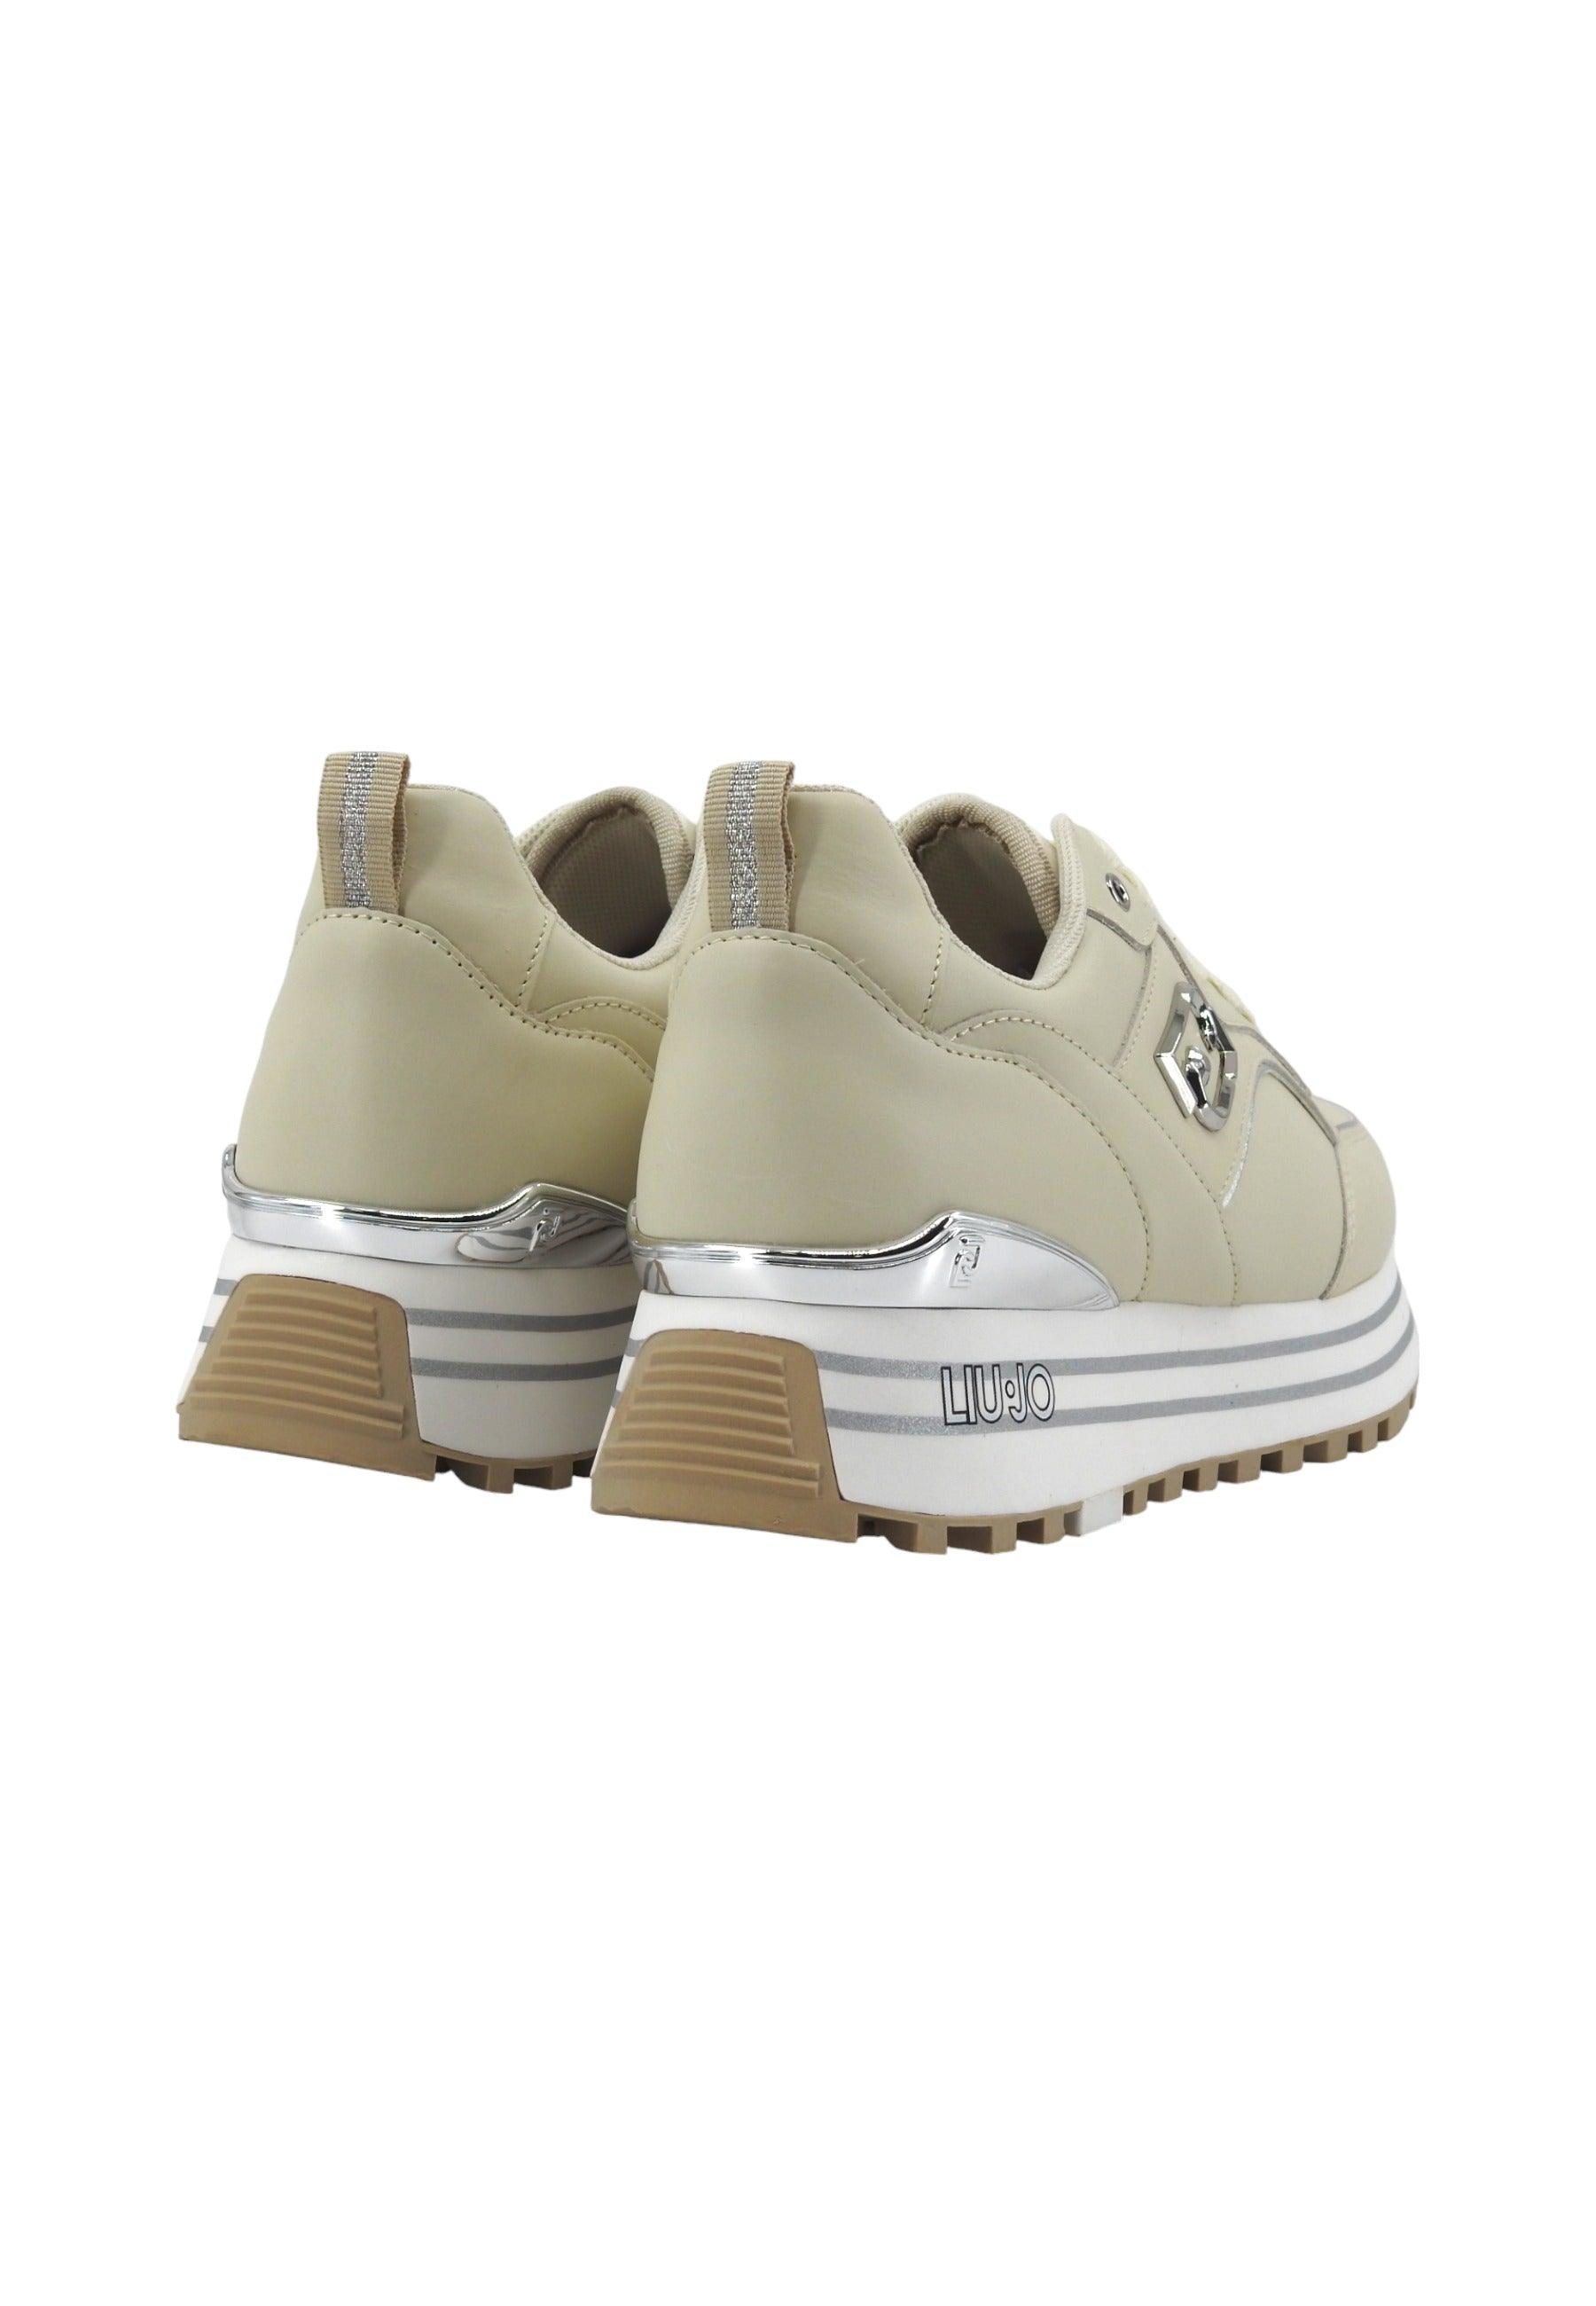 LIU JO Maxi Wonder 73 Sneaker Donna Ivory Beige BA4059P0102 - Sandrini Calzature e Abbigliamento